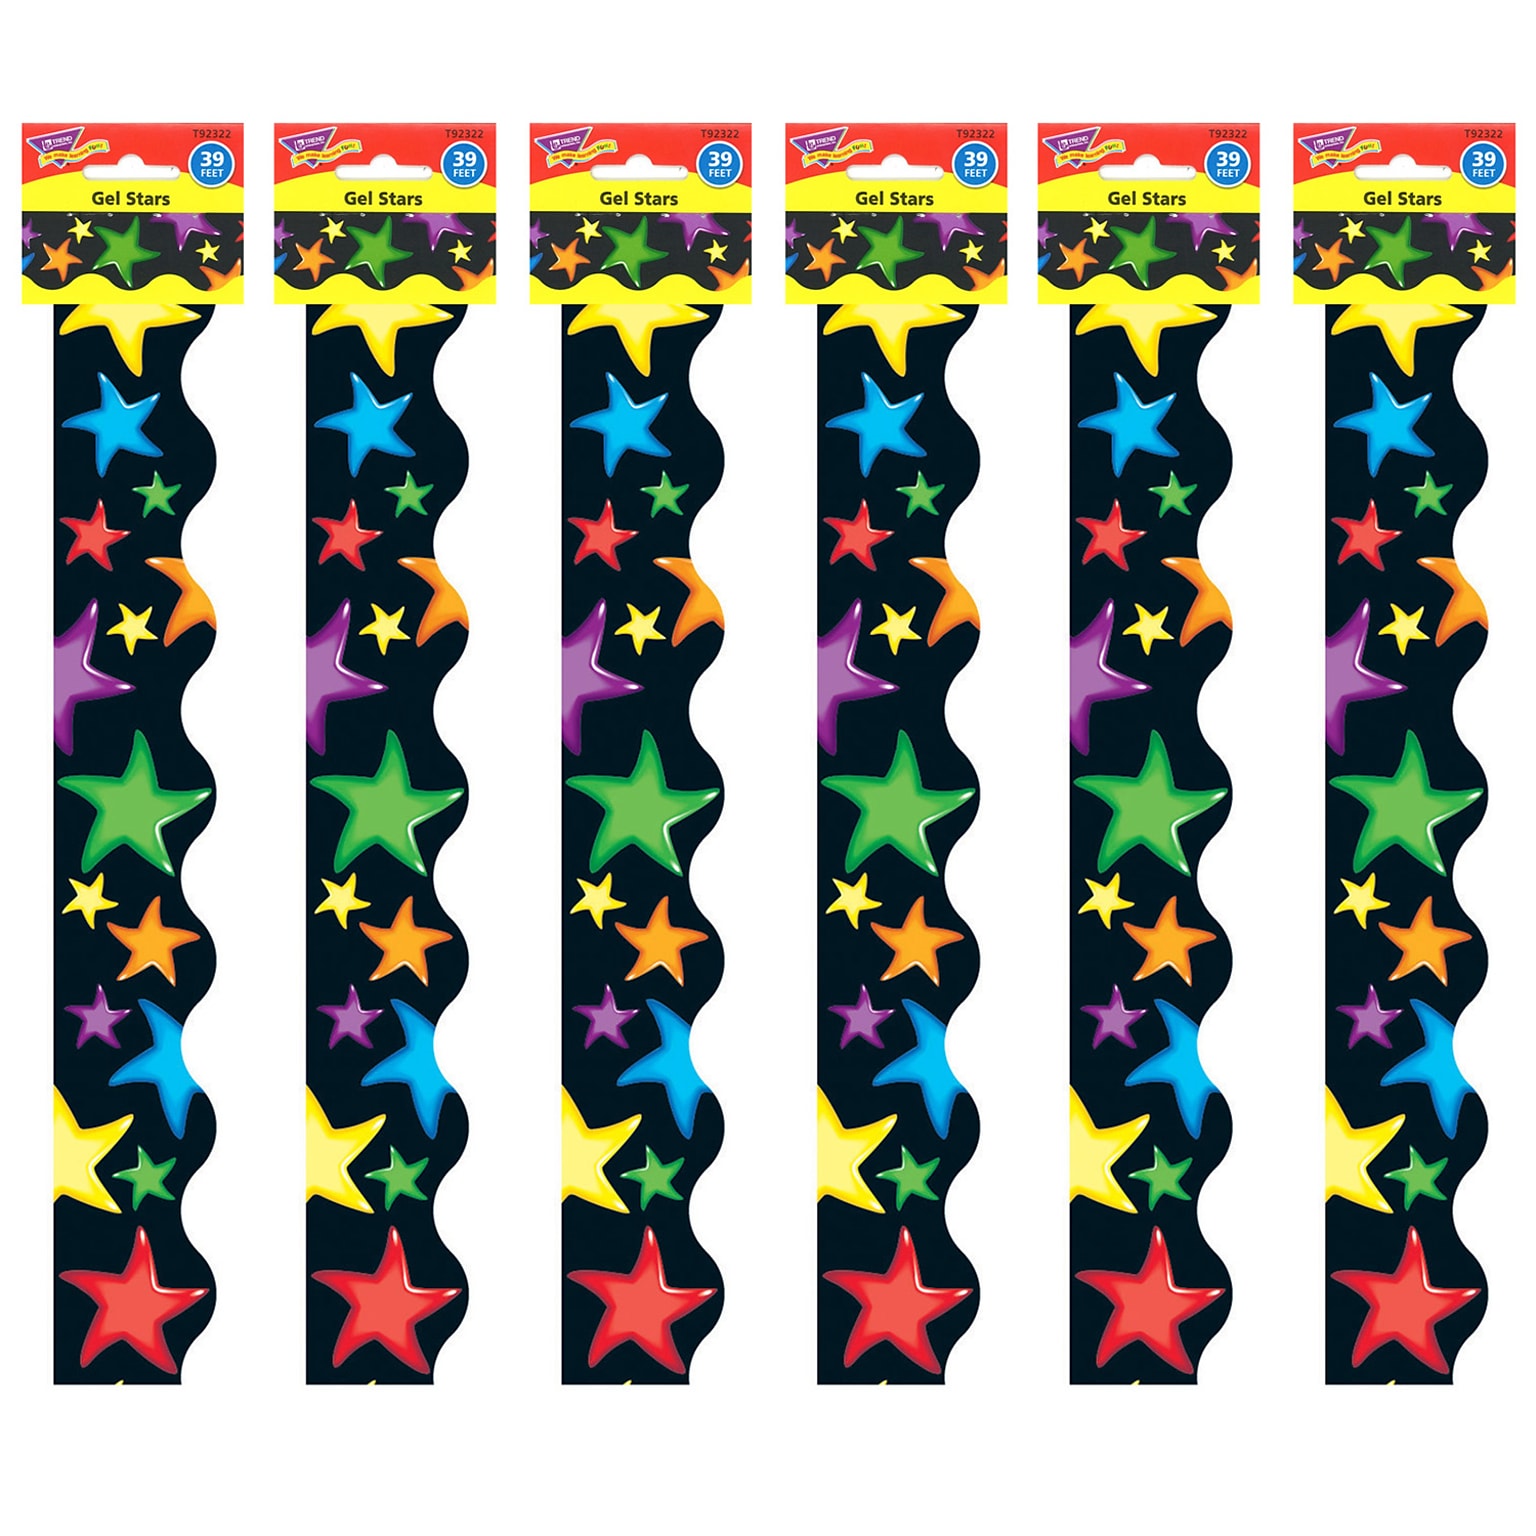 TREND Gel Stars Terrific Trimmers, 39 Feet Per Pack, 6 Packs (T-92322-6)